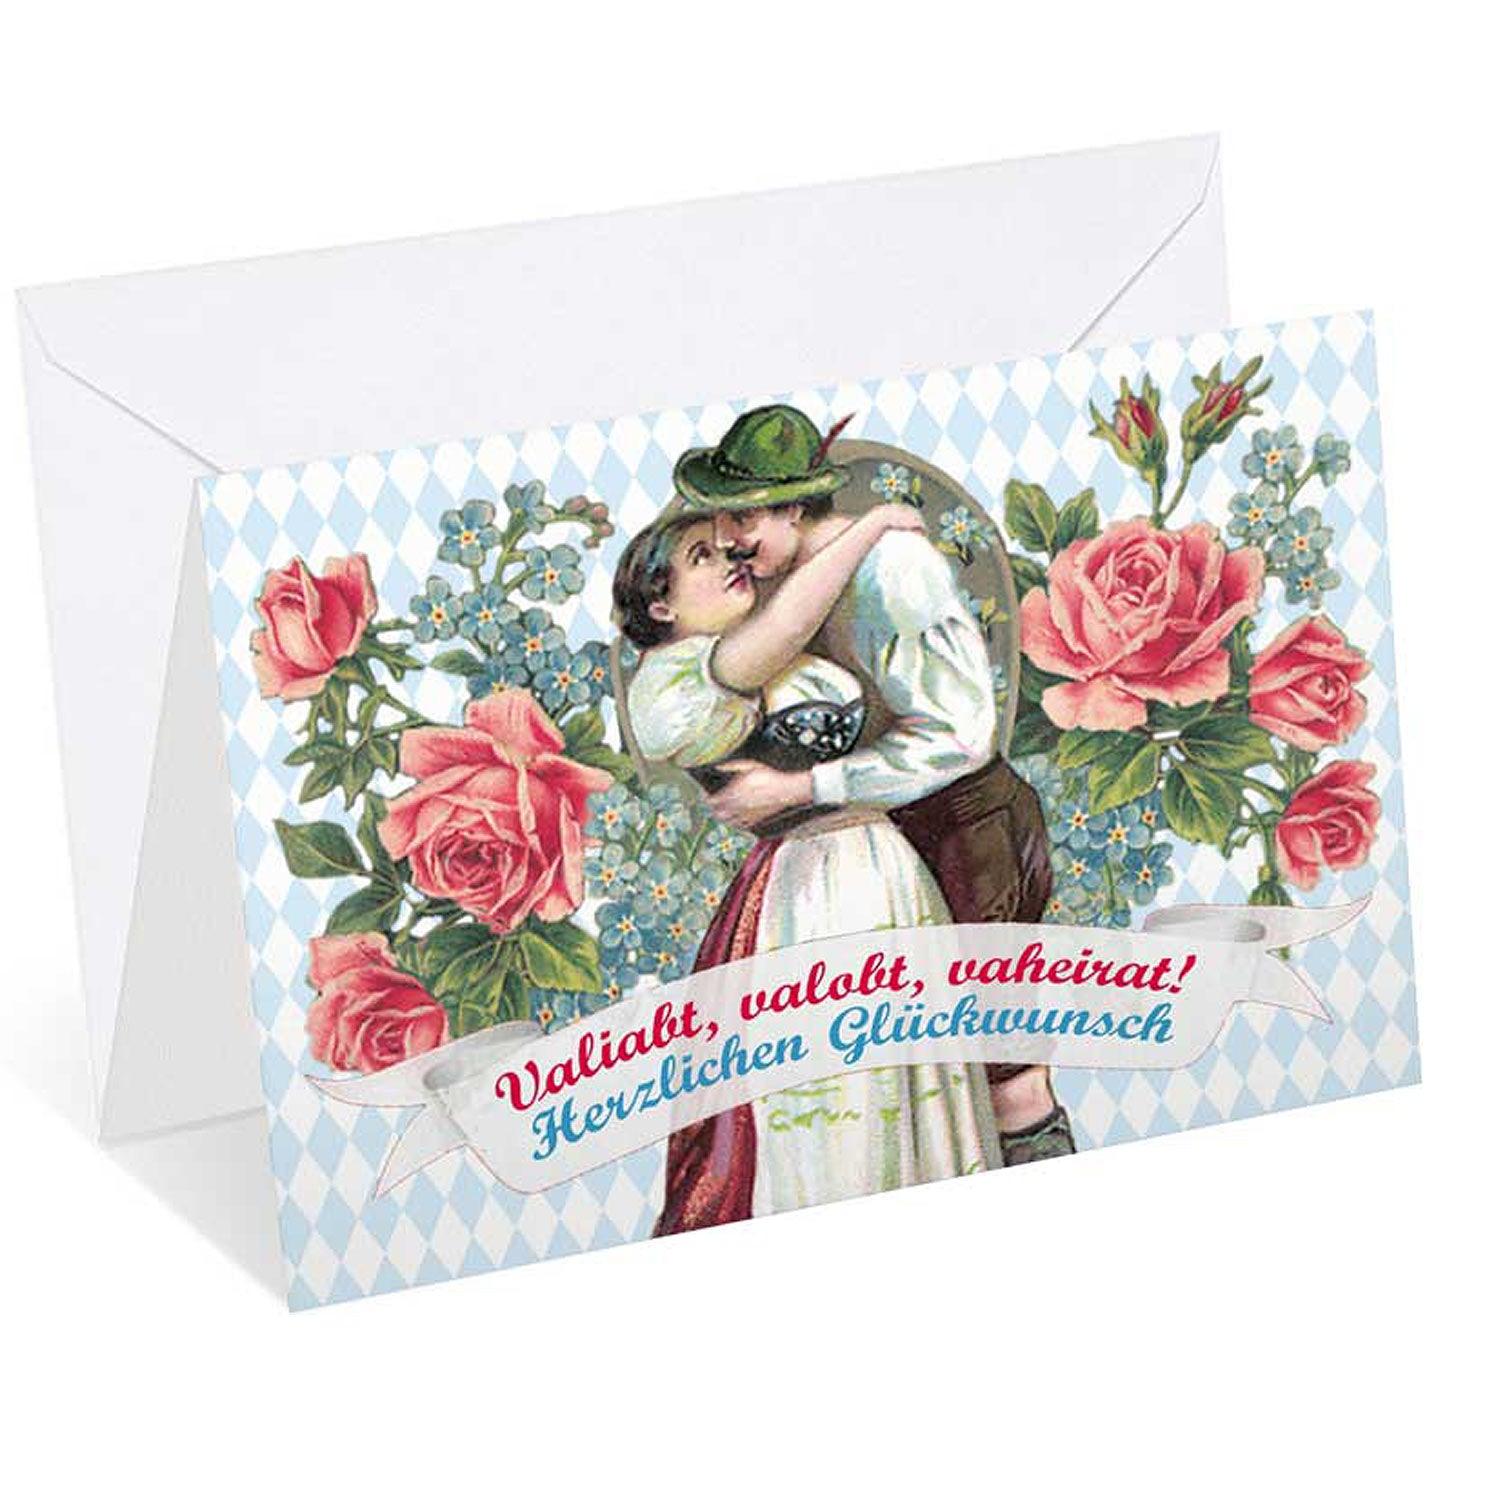 Hochzeitskarte "Valiabt, valobt, vaheirat!" - bavariashop - mei LebensGfui